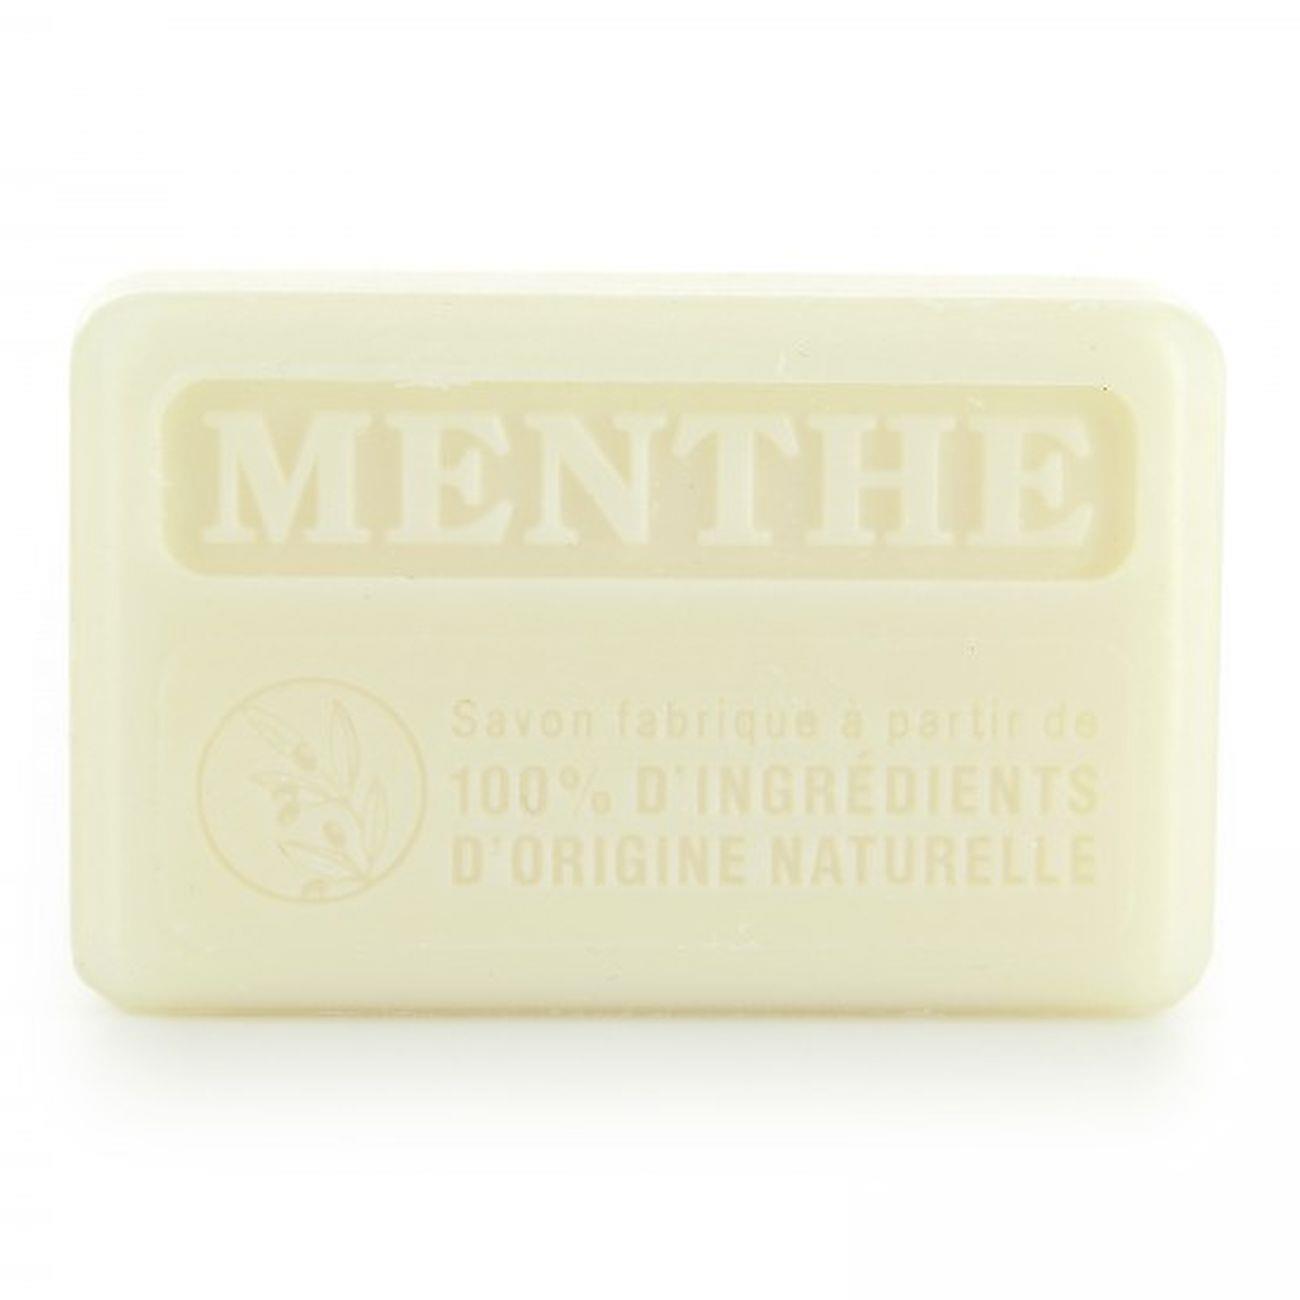 Marseille Soap 100% Natural Menthe Poivree (Peppermint) 125g